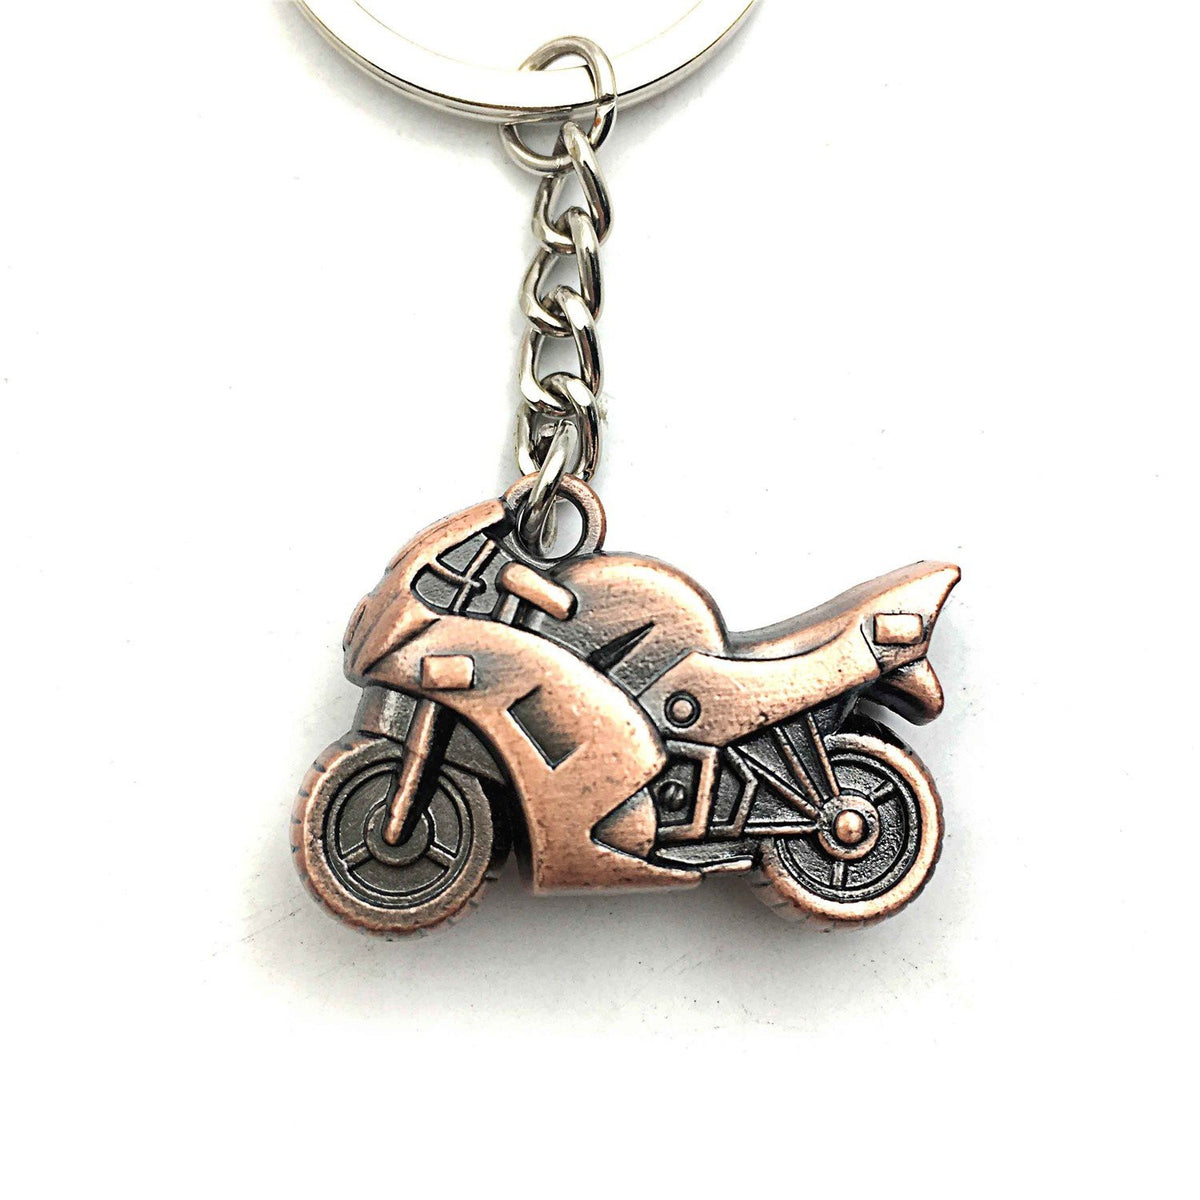 Wheel hub Key Chain Motorcycle Car Bicycle Keyring Ring Keyfob